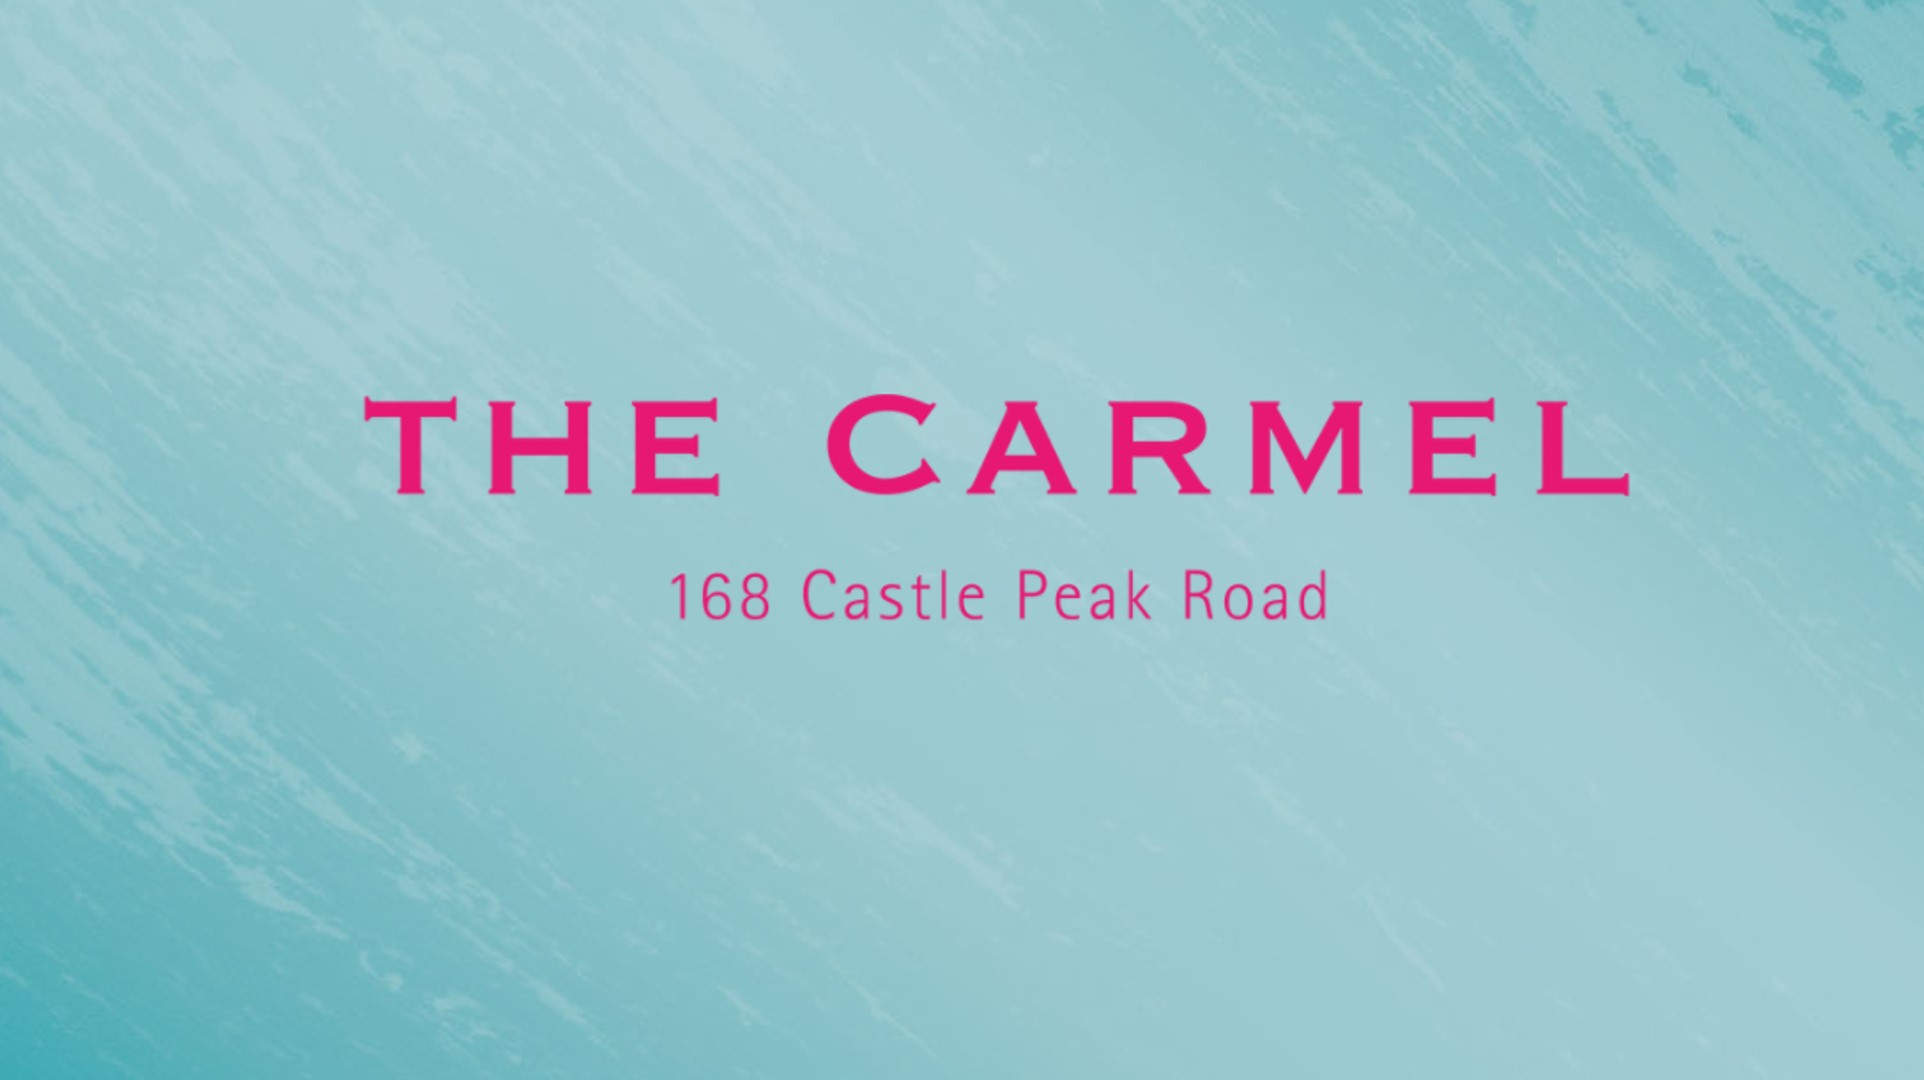 THE CARMEL